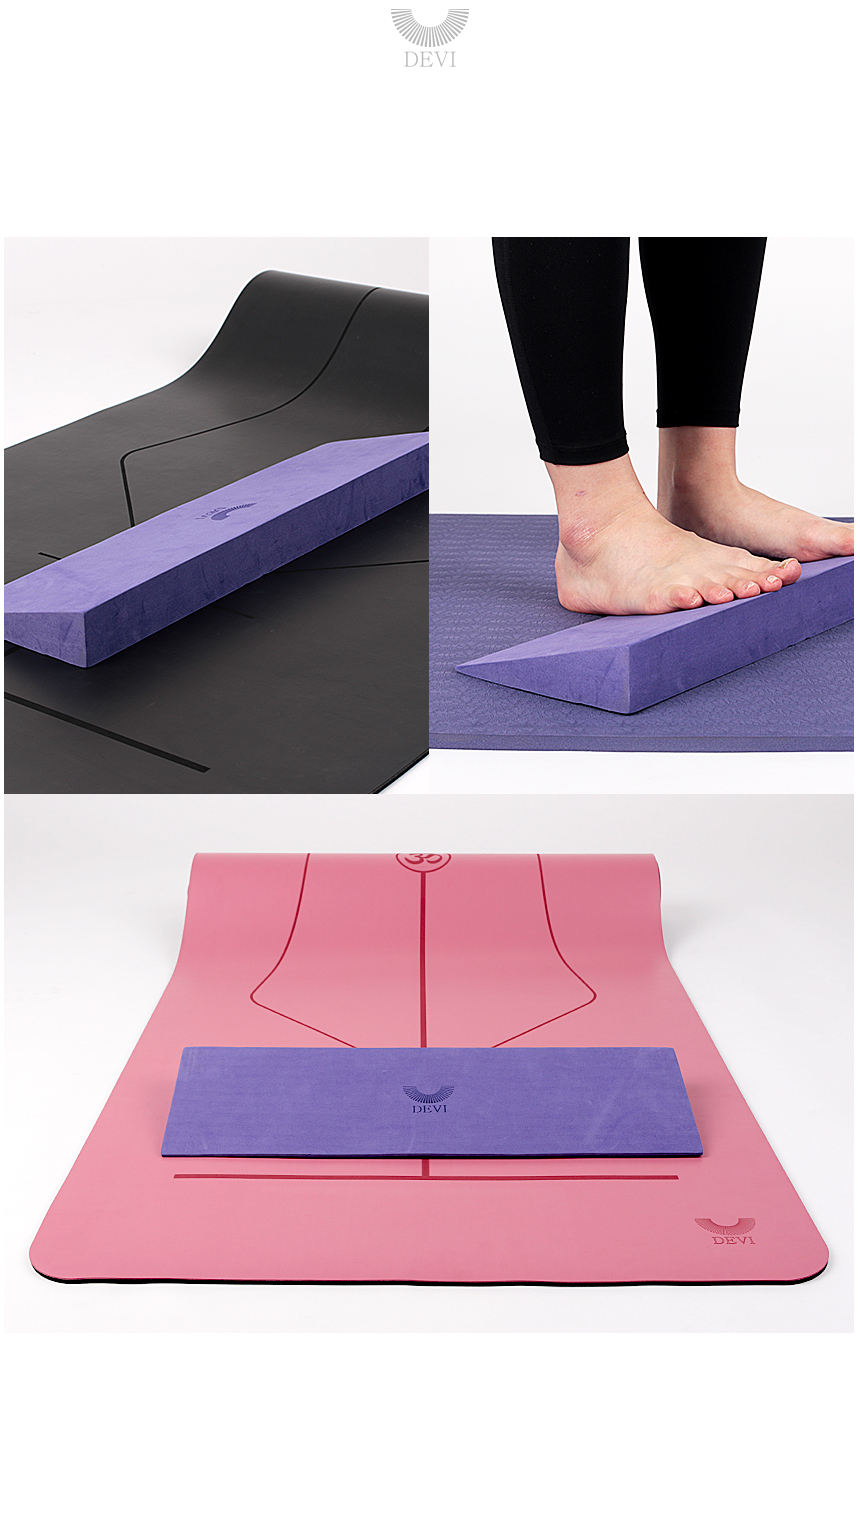 Gaiam Yoga Wedge Purple